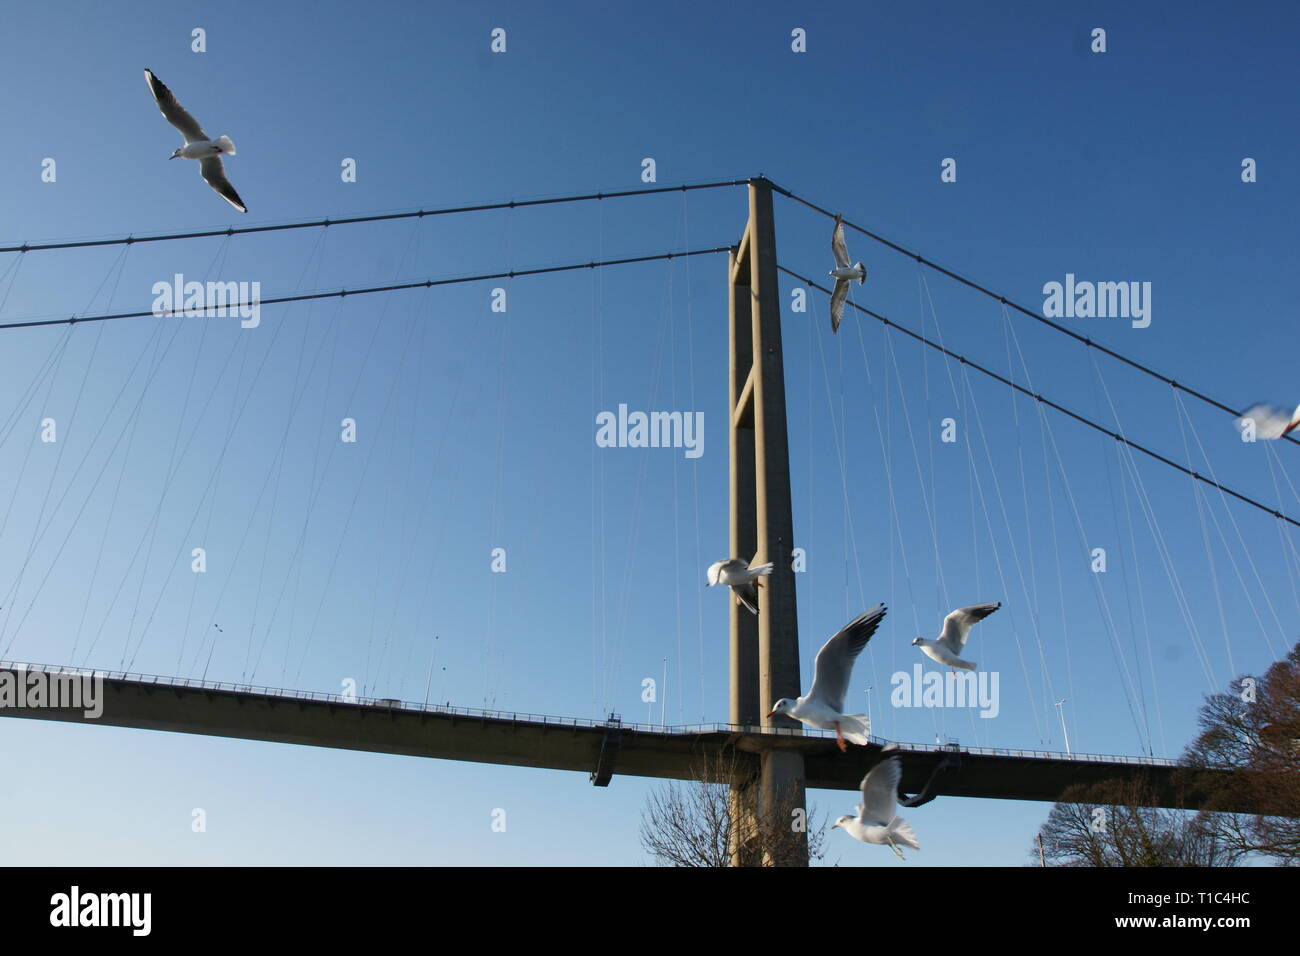 seagulls at the Humber Bridge, Stock Photo